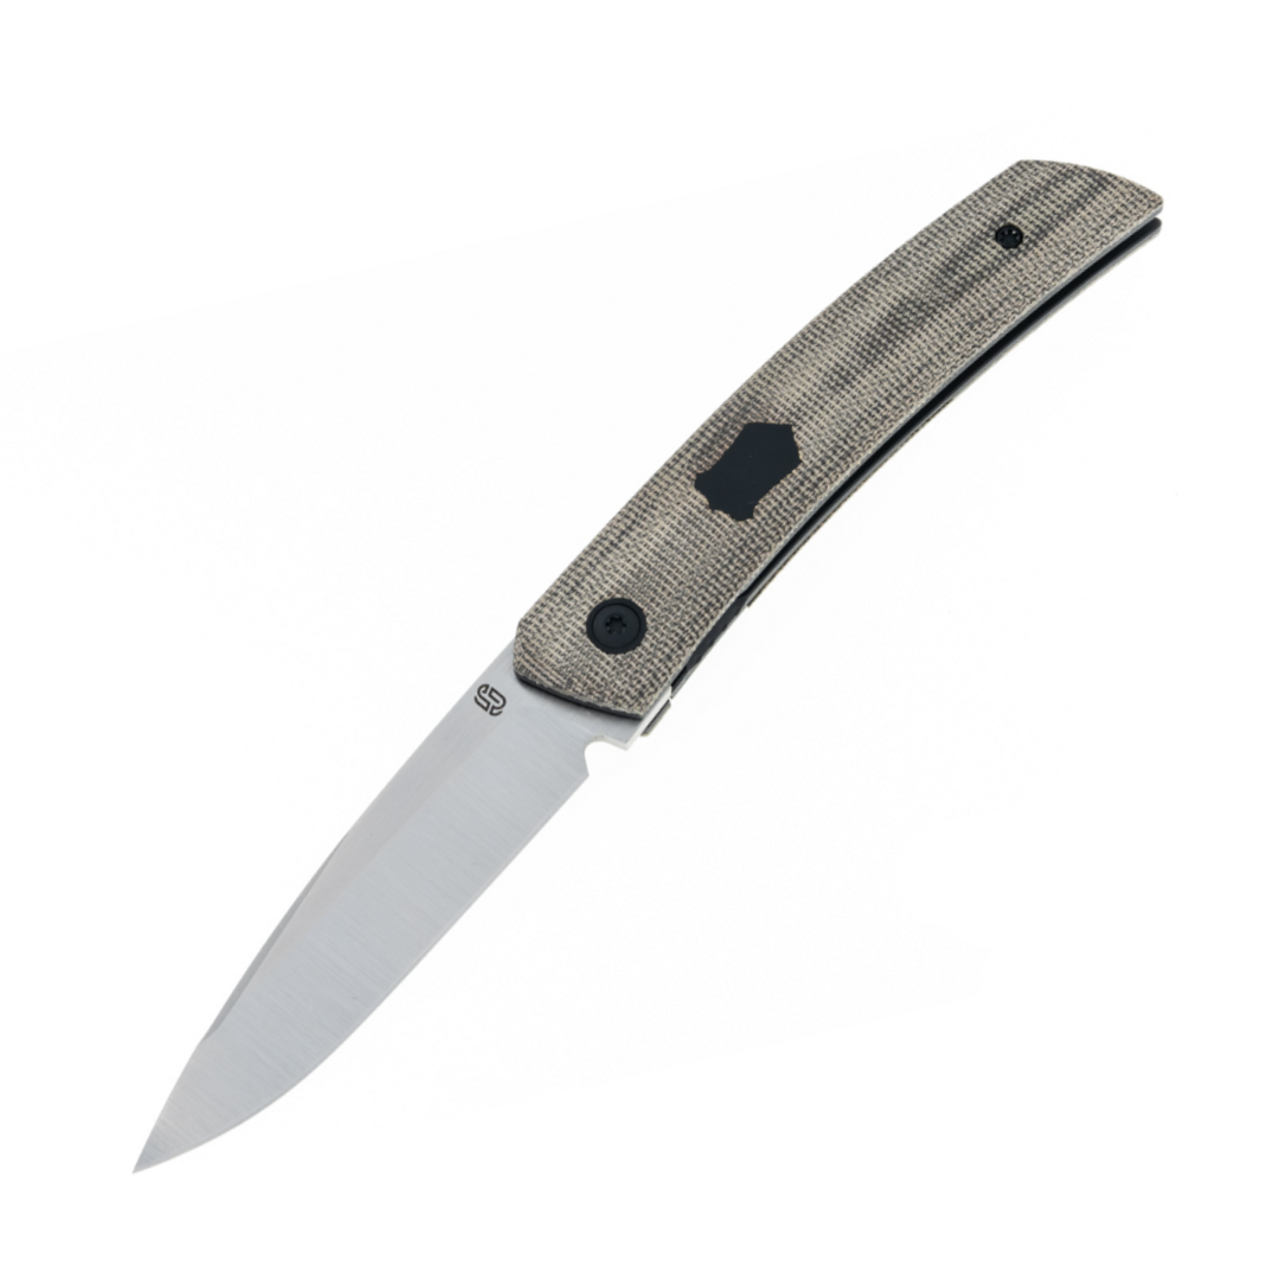 M390 Blade Folding Knife Tactical Rescue Survival Flipper Ceramic